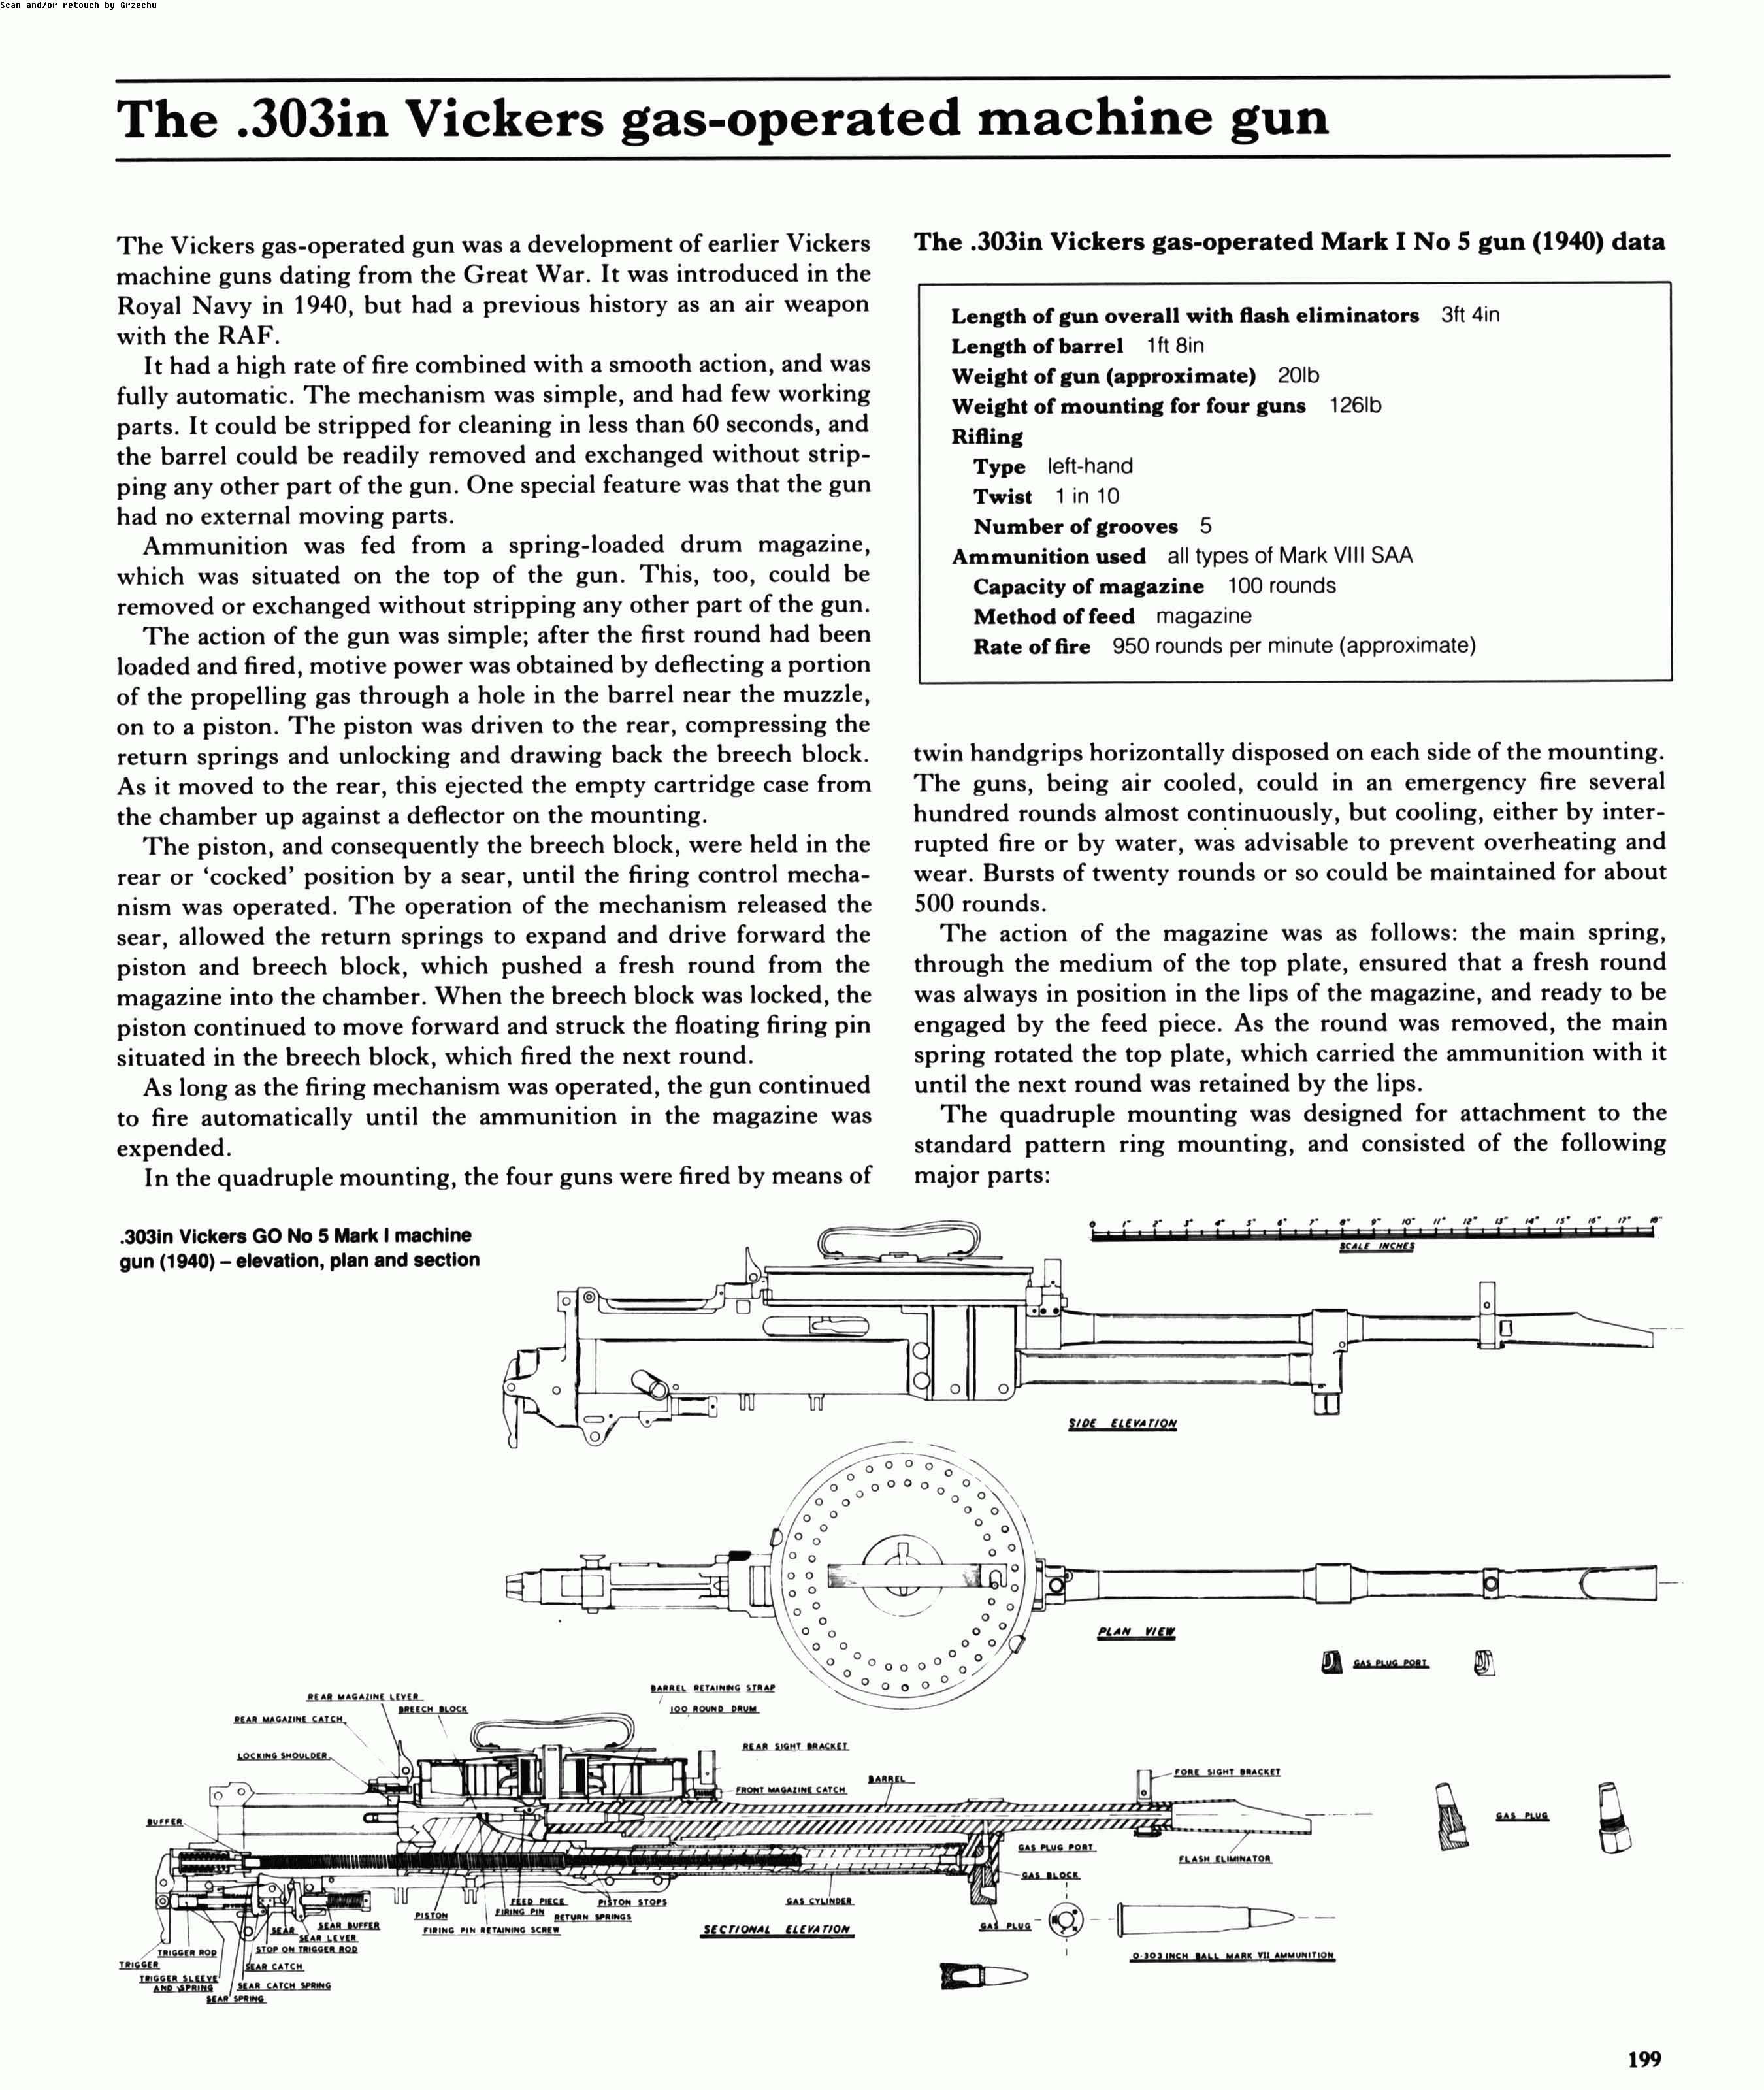 Allied Coastal Forces of World War II (1) Fairmile designs & U.S. submarine chasers_Page_201.jpg